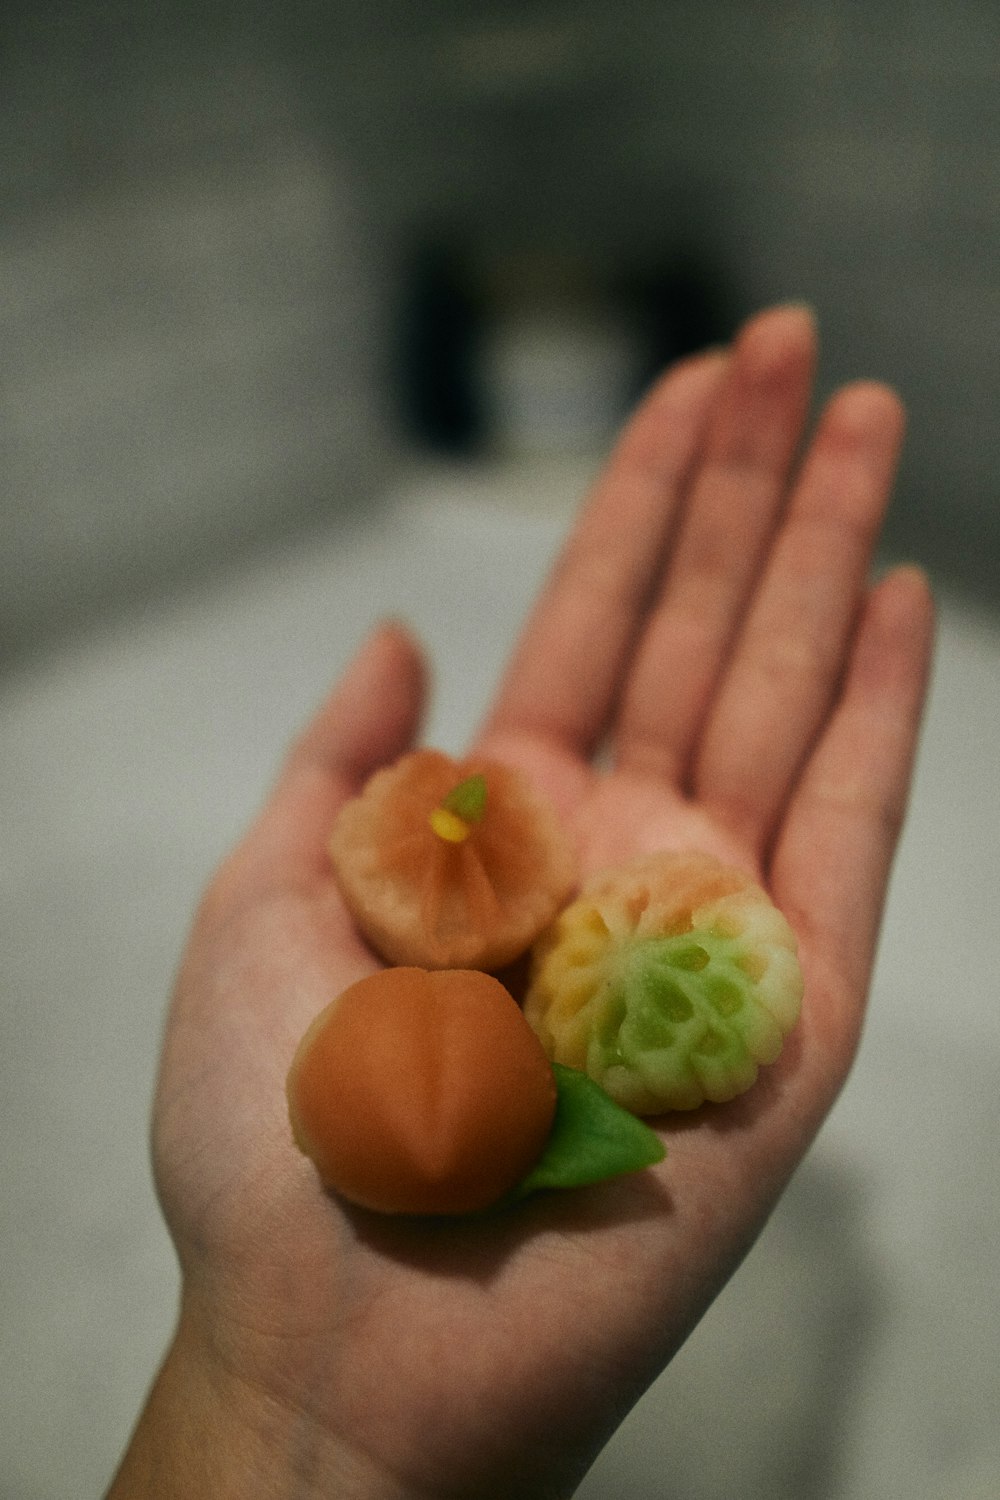 person holding orange round fruit